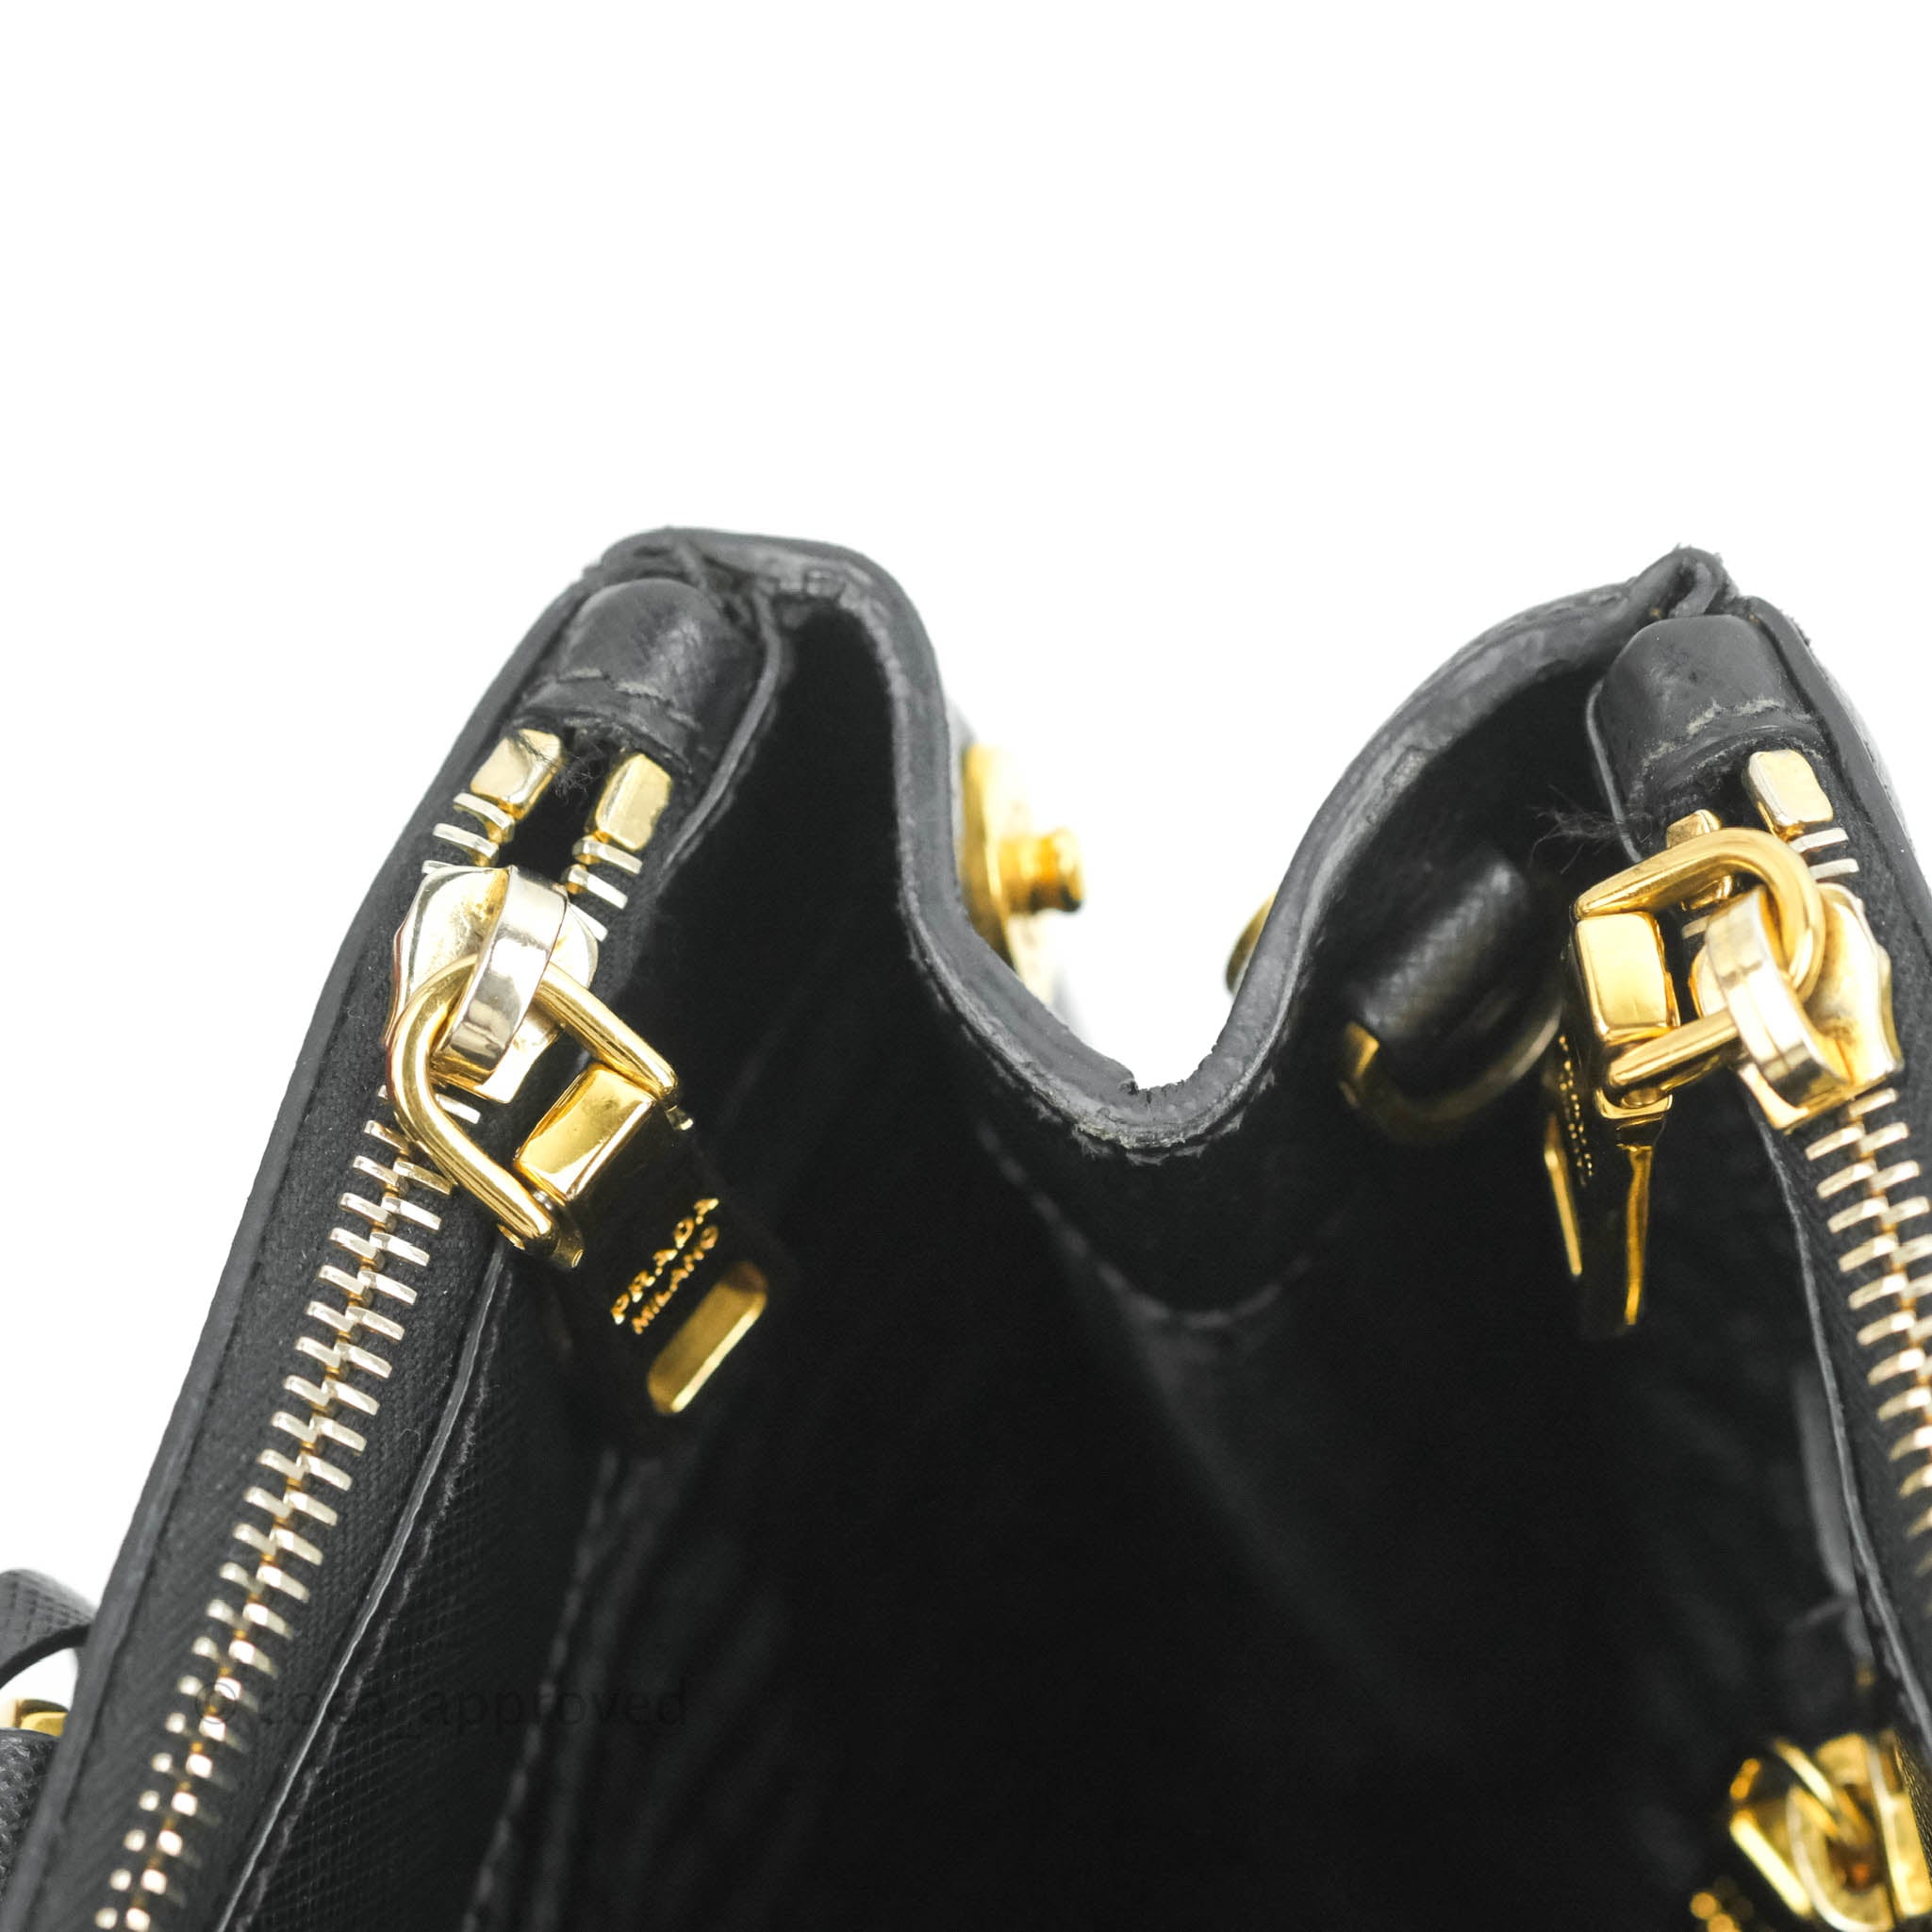 Prada Medium Saffiano Lux Galleria Double Zip Bowling Bag - Black Handle  Bags, Handbags - PRA860491